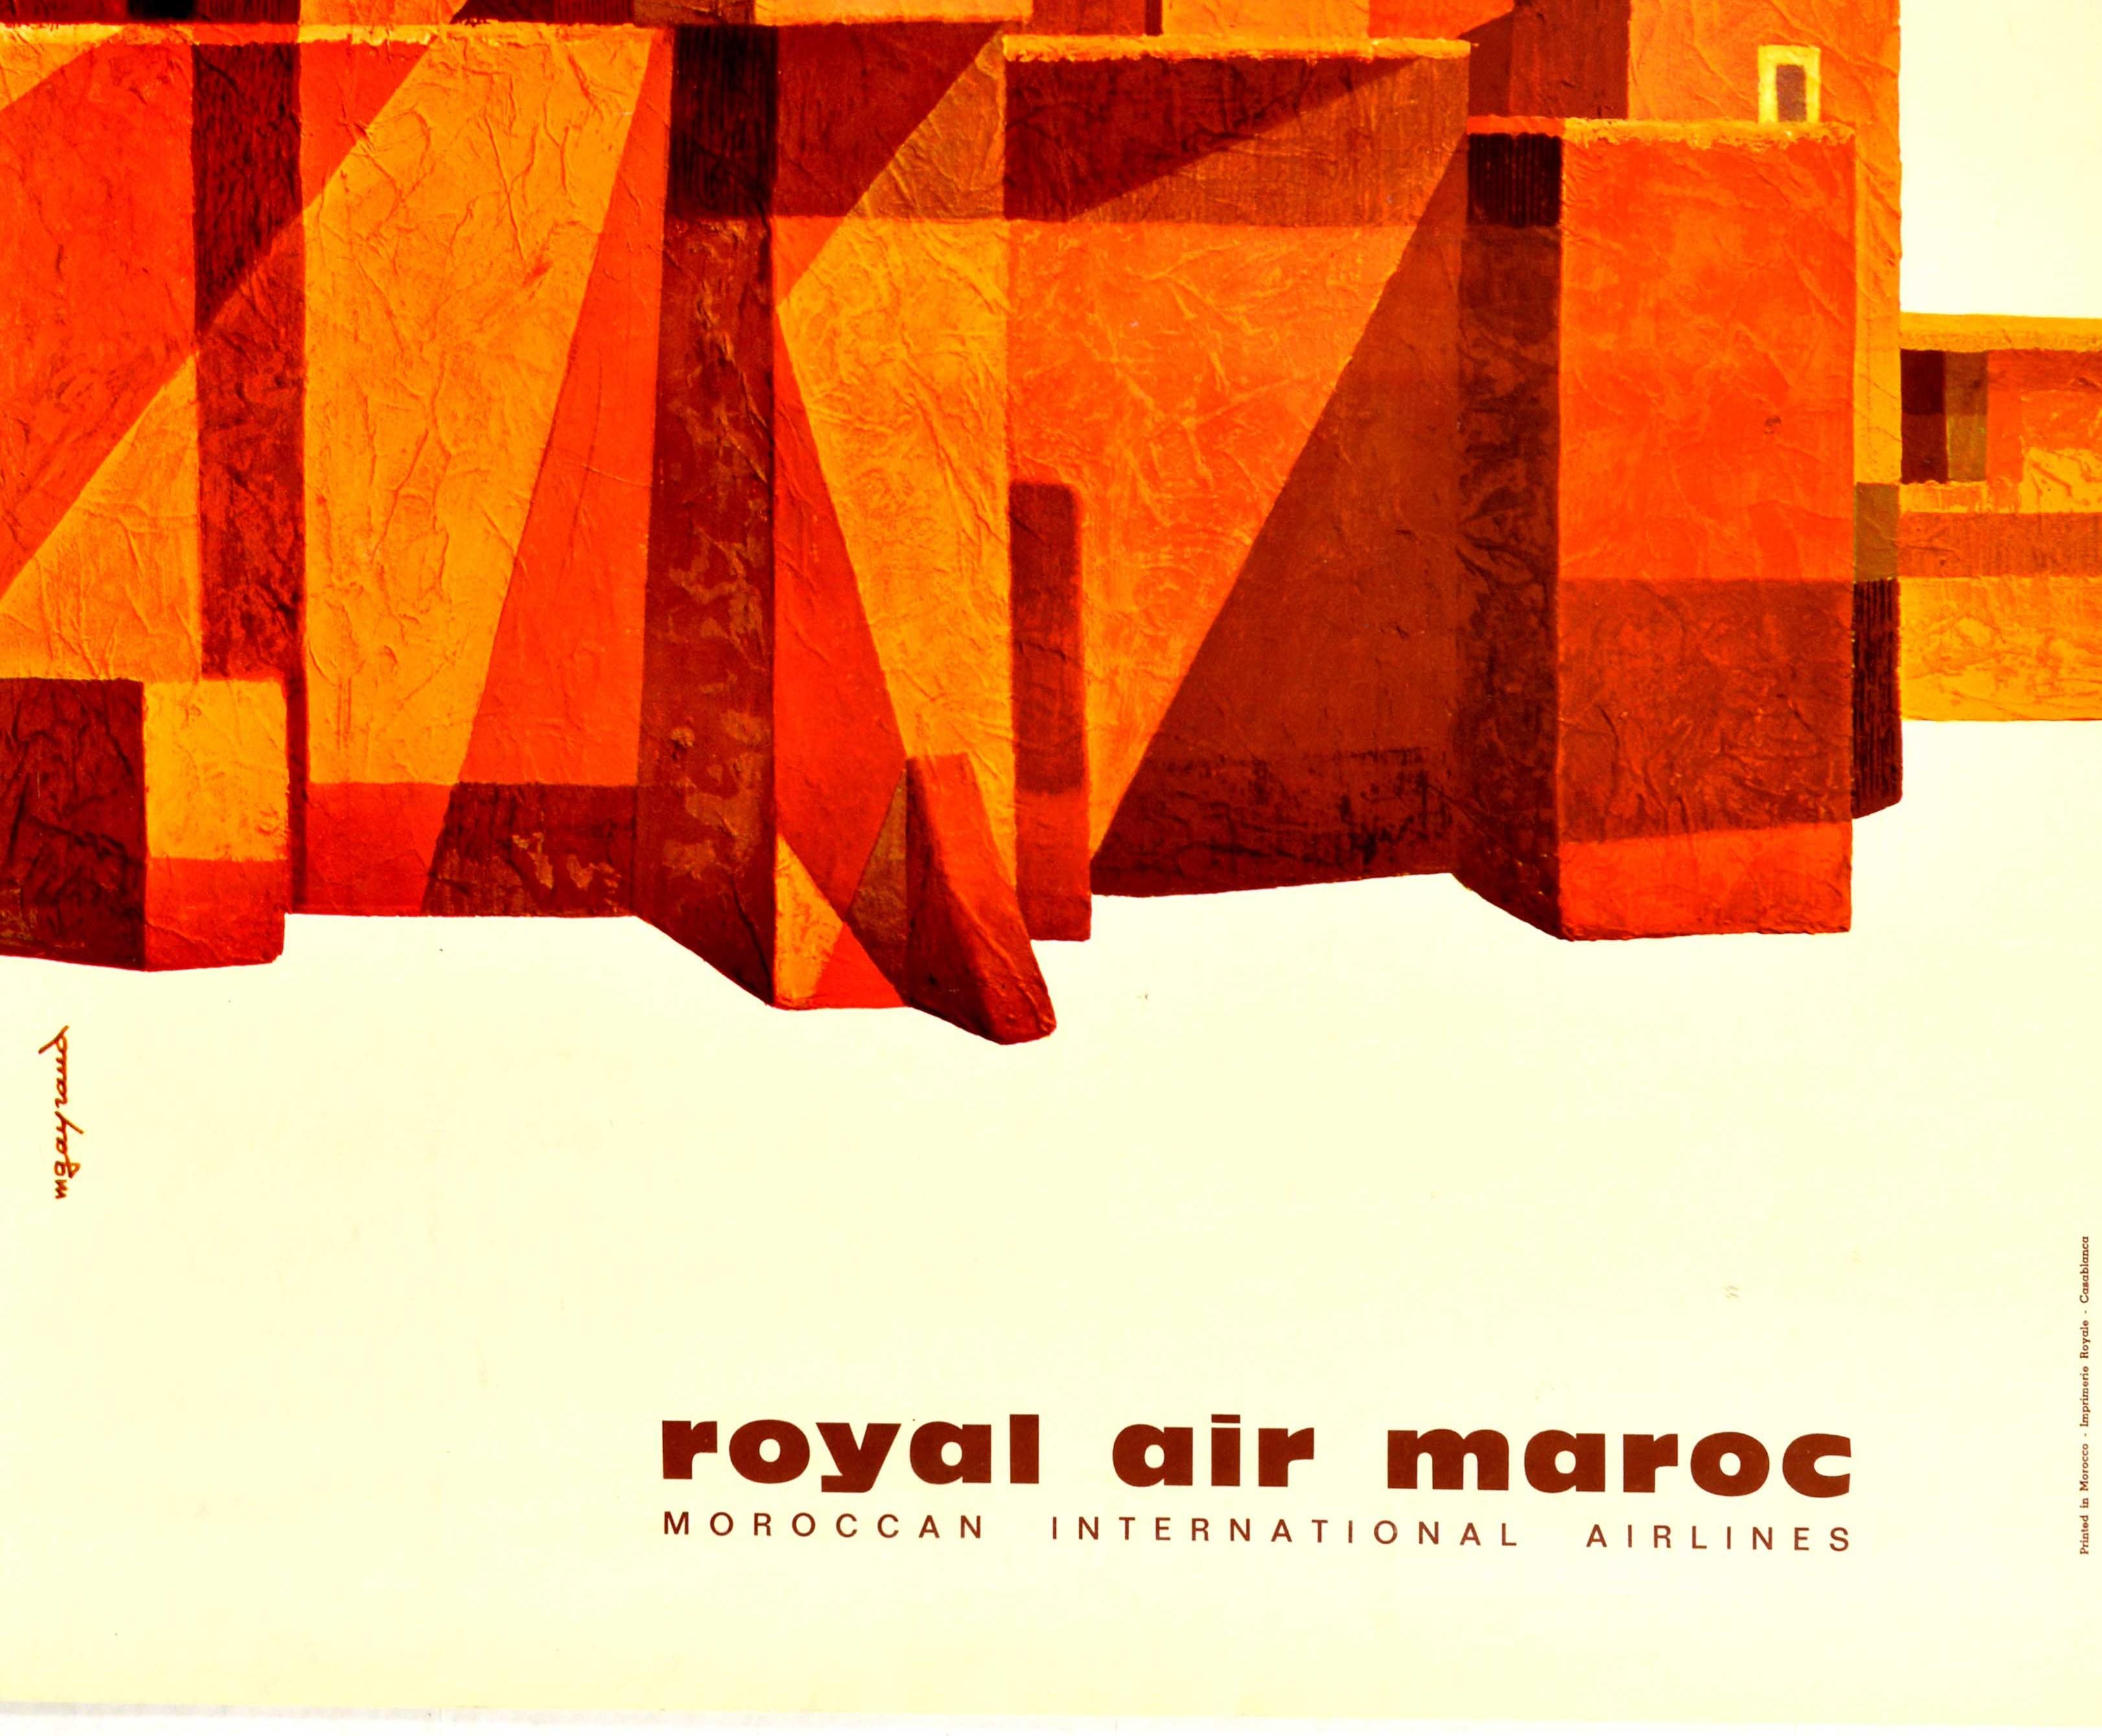 Moroccan Original Vintage Poster Morocco N. Africa Royal Air Maroc International Airlines